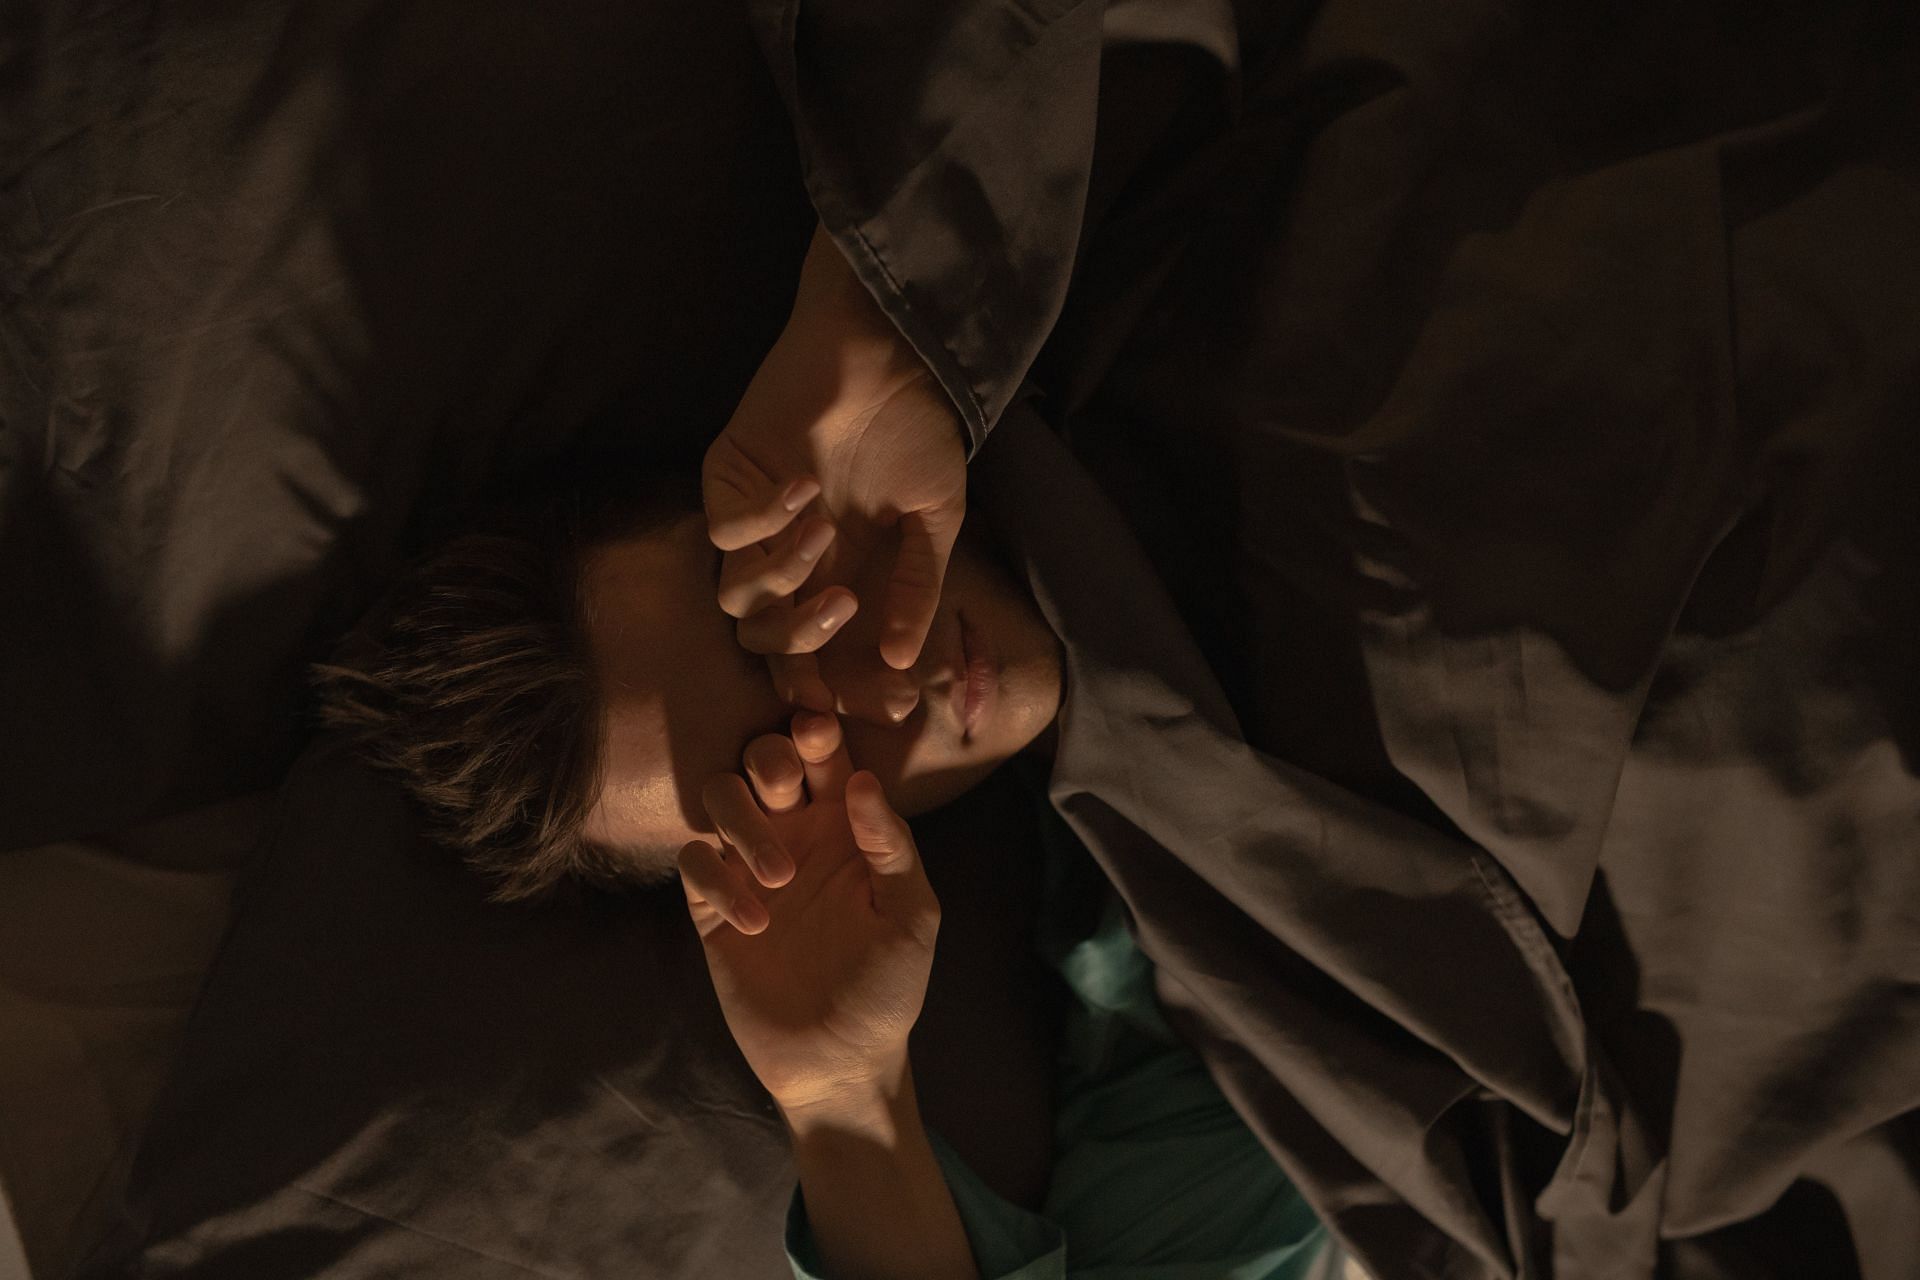 Sleep changes among Side-effects of Melatonin (Image sourced via Pexels / Photo by shvets)